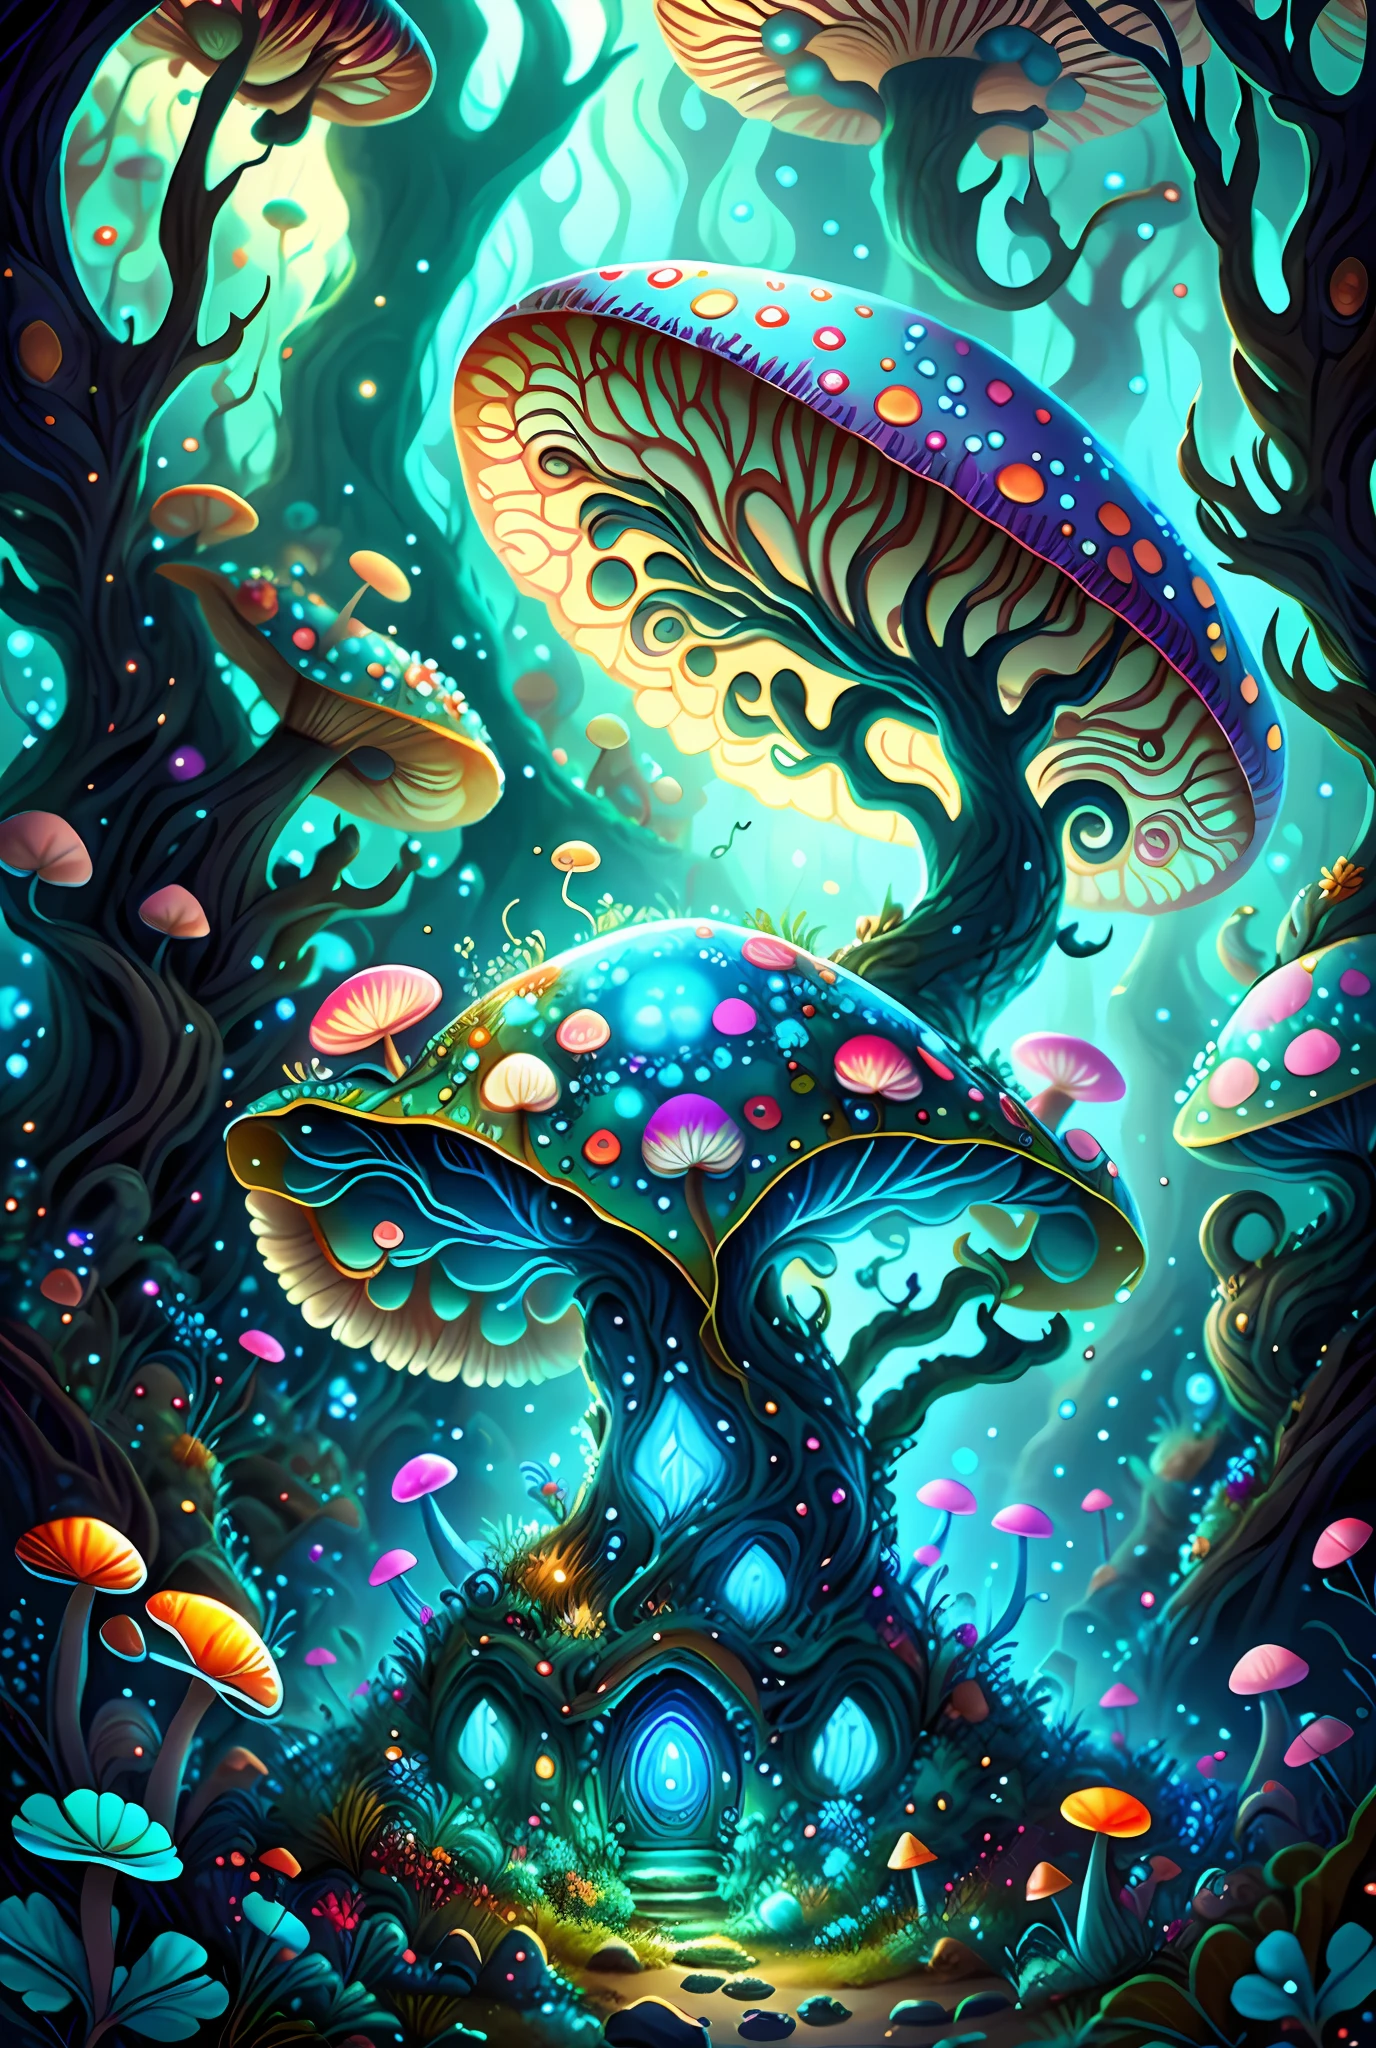 there is a painting of a fantasy mushroom forest with a dragon, detailed digital 2d fantasy art, detailed fantasy digital art, Arte digital 4K altamente detallado, digital 2d fantasy art, hongos azules brillantes, psychedelic mushrooms dream, Ilustraciones de fondo, Arte digital detallado 4K, magic mushrooms, Hongos azules brillantes en el fango, magic mushroom, Bosque de hongos, colorfull digital fantasy art